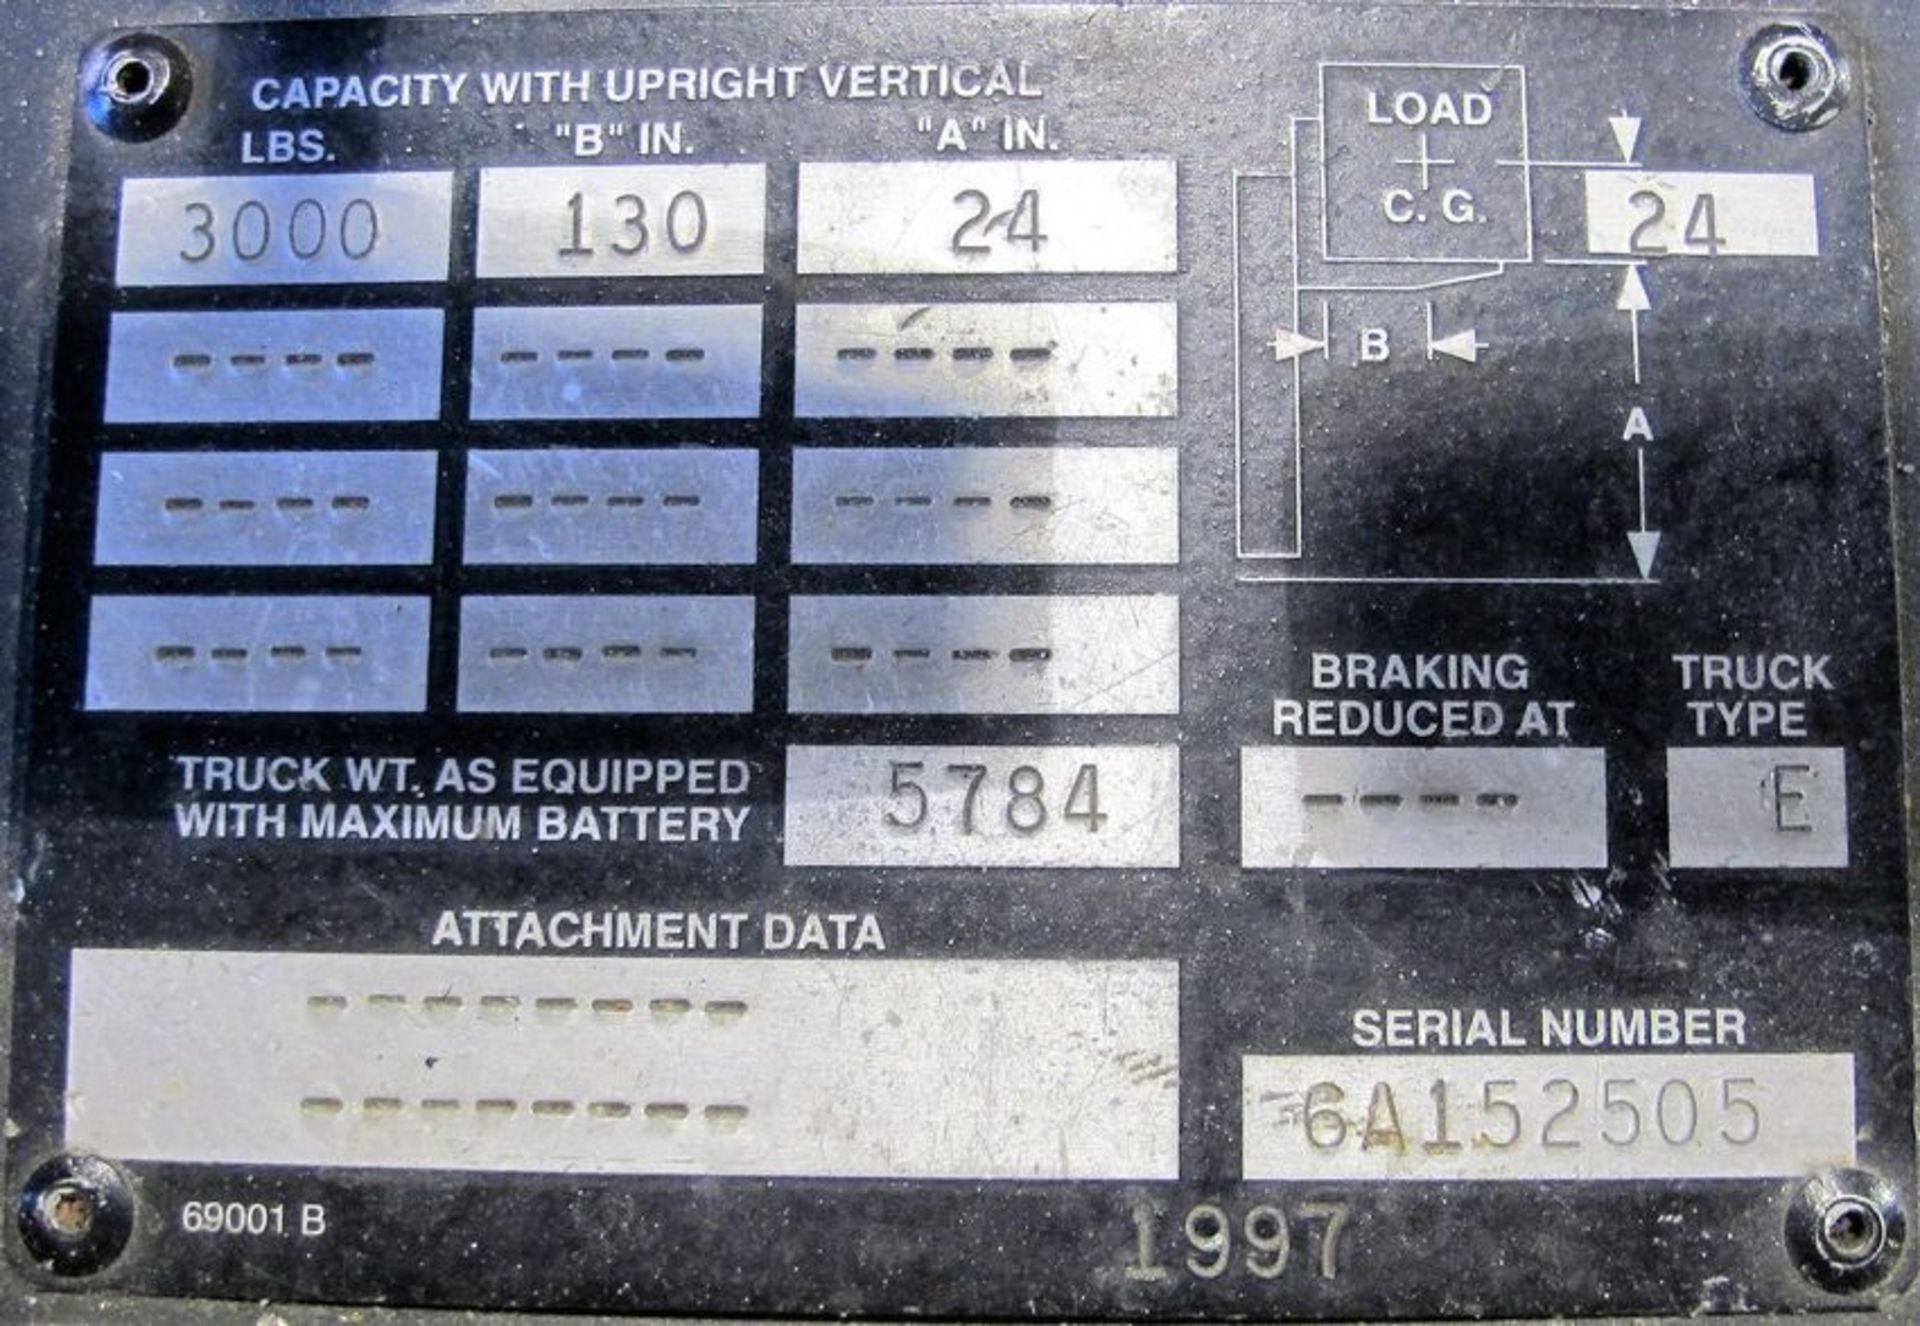 CROWN 30WBTL ELECTRIC STACKER, 3,000LB CAP., 130" MAX LIFT, 24V, S/N 6A152505 W/ EXIDE CHARGER - Image 4 of 5